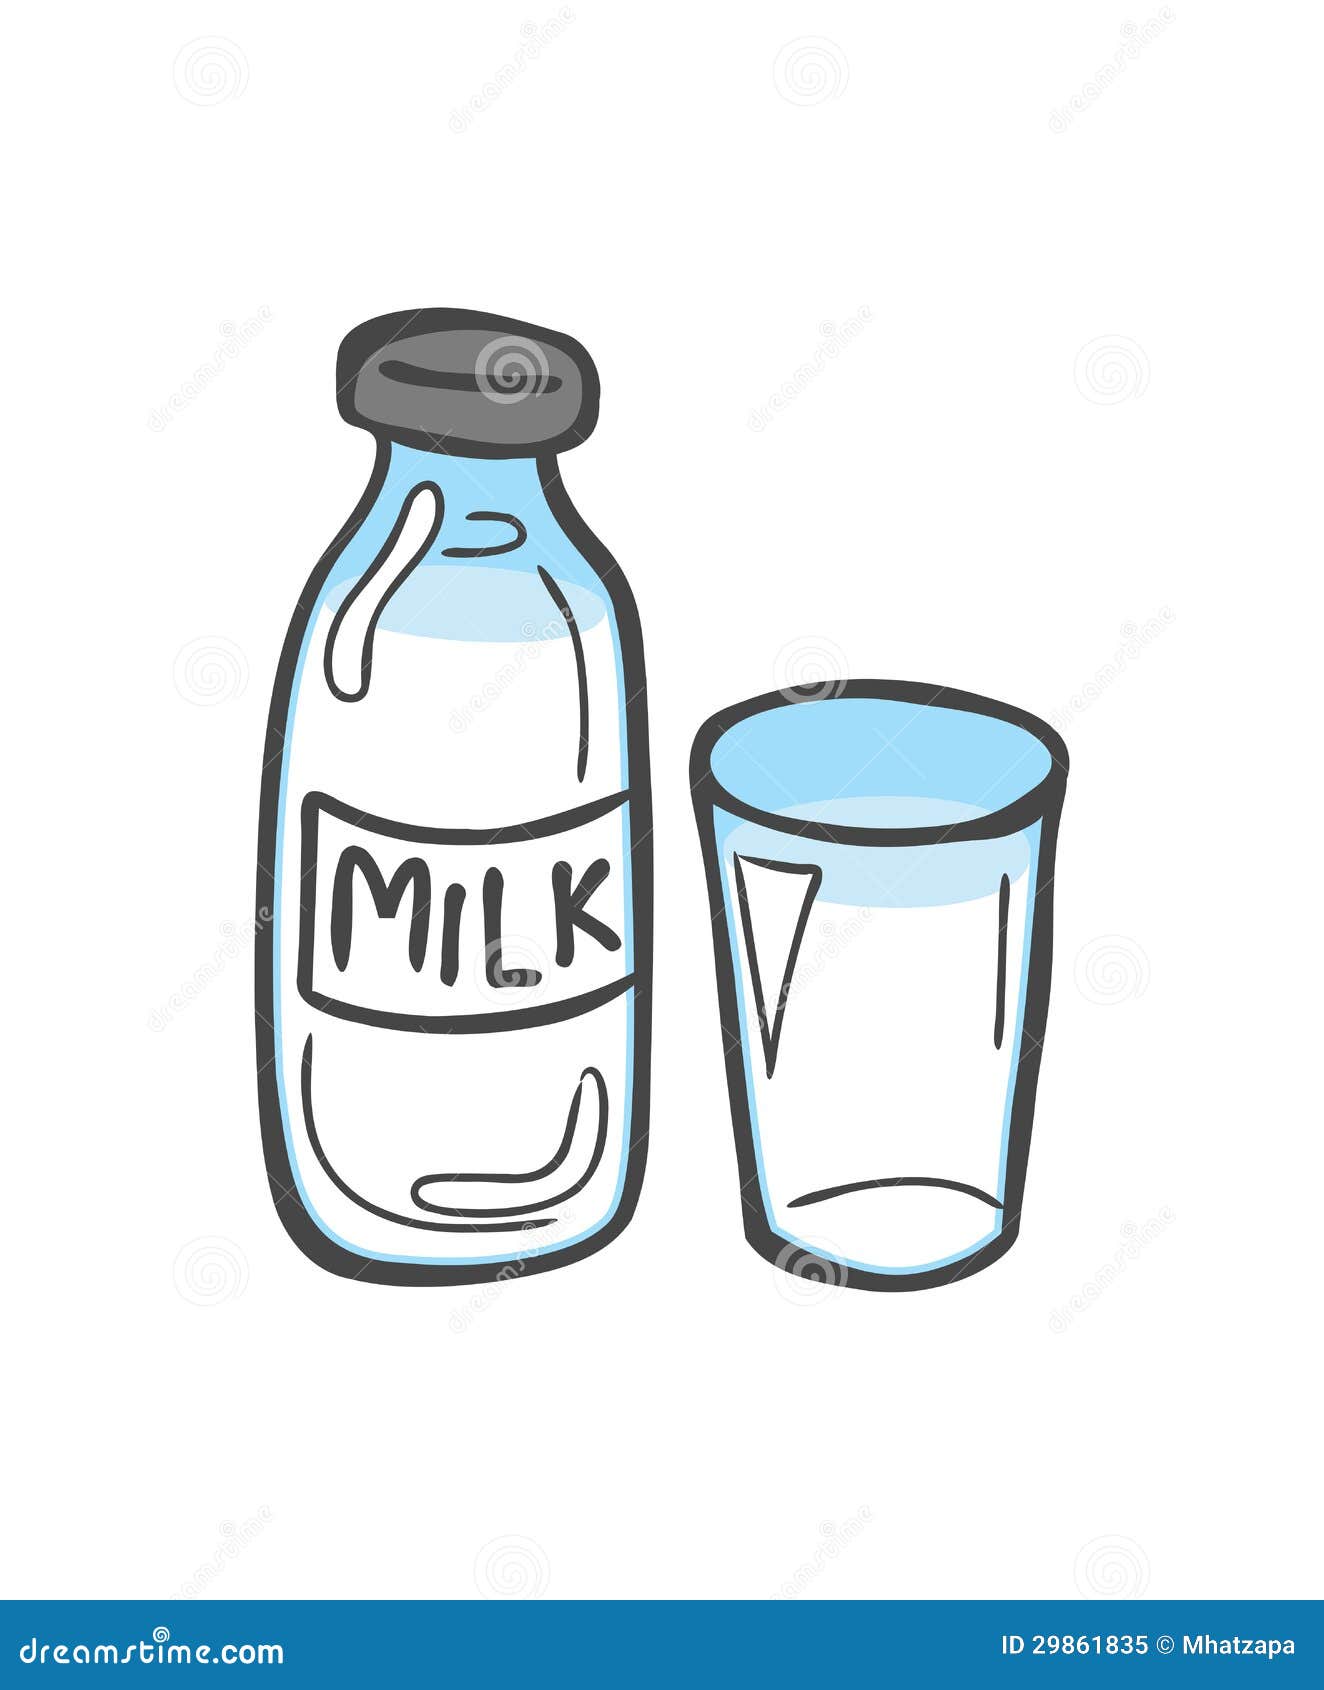 Bottle of milk stock illustration. Illustration of organic - 29861835